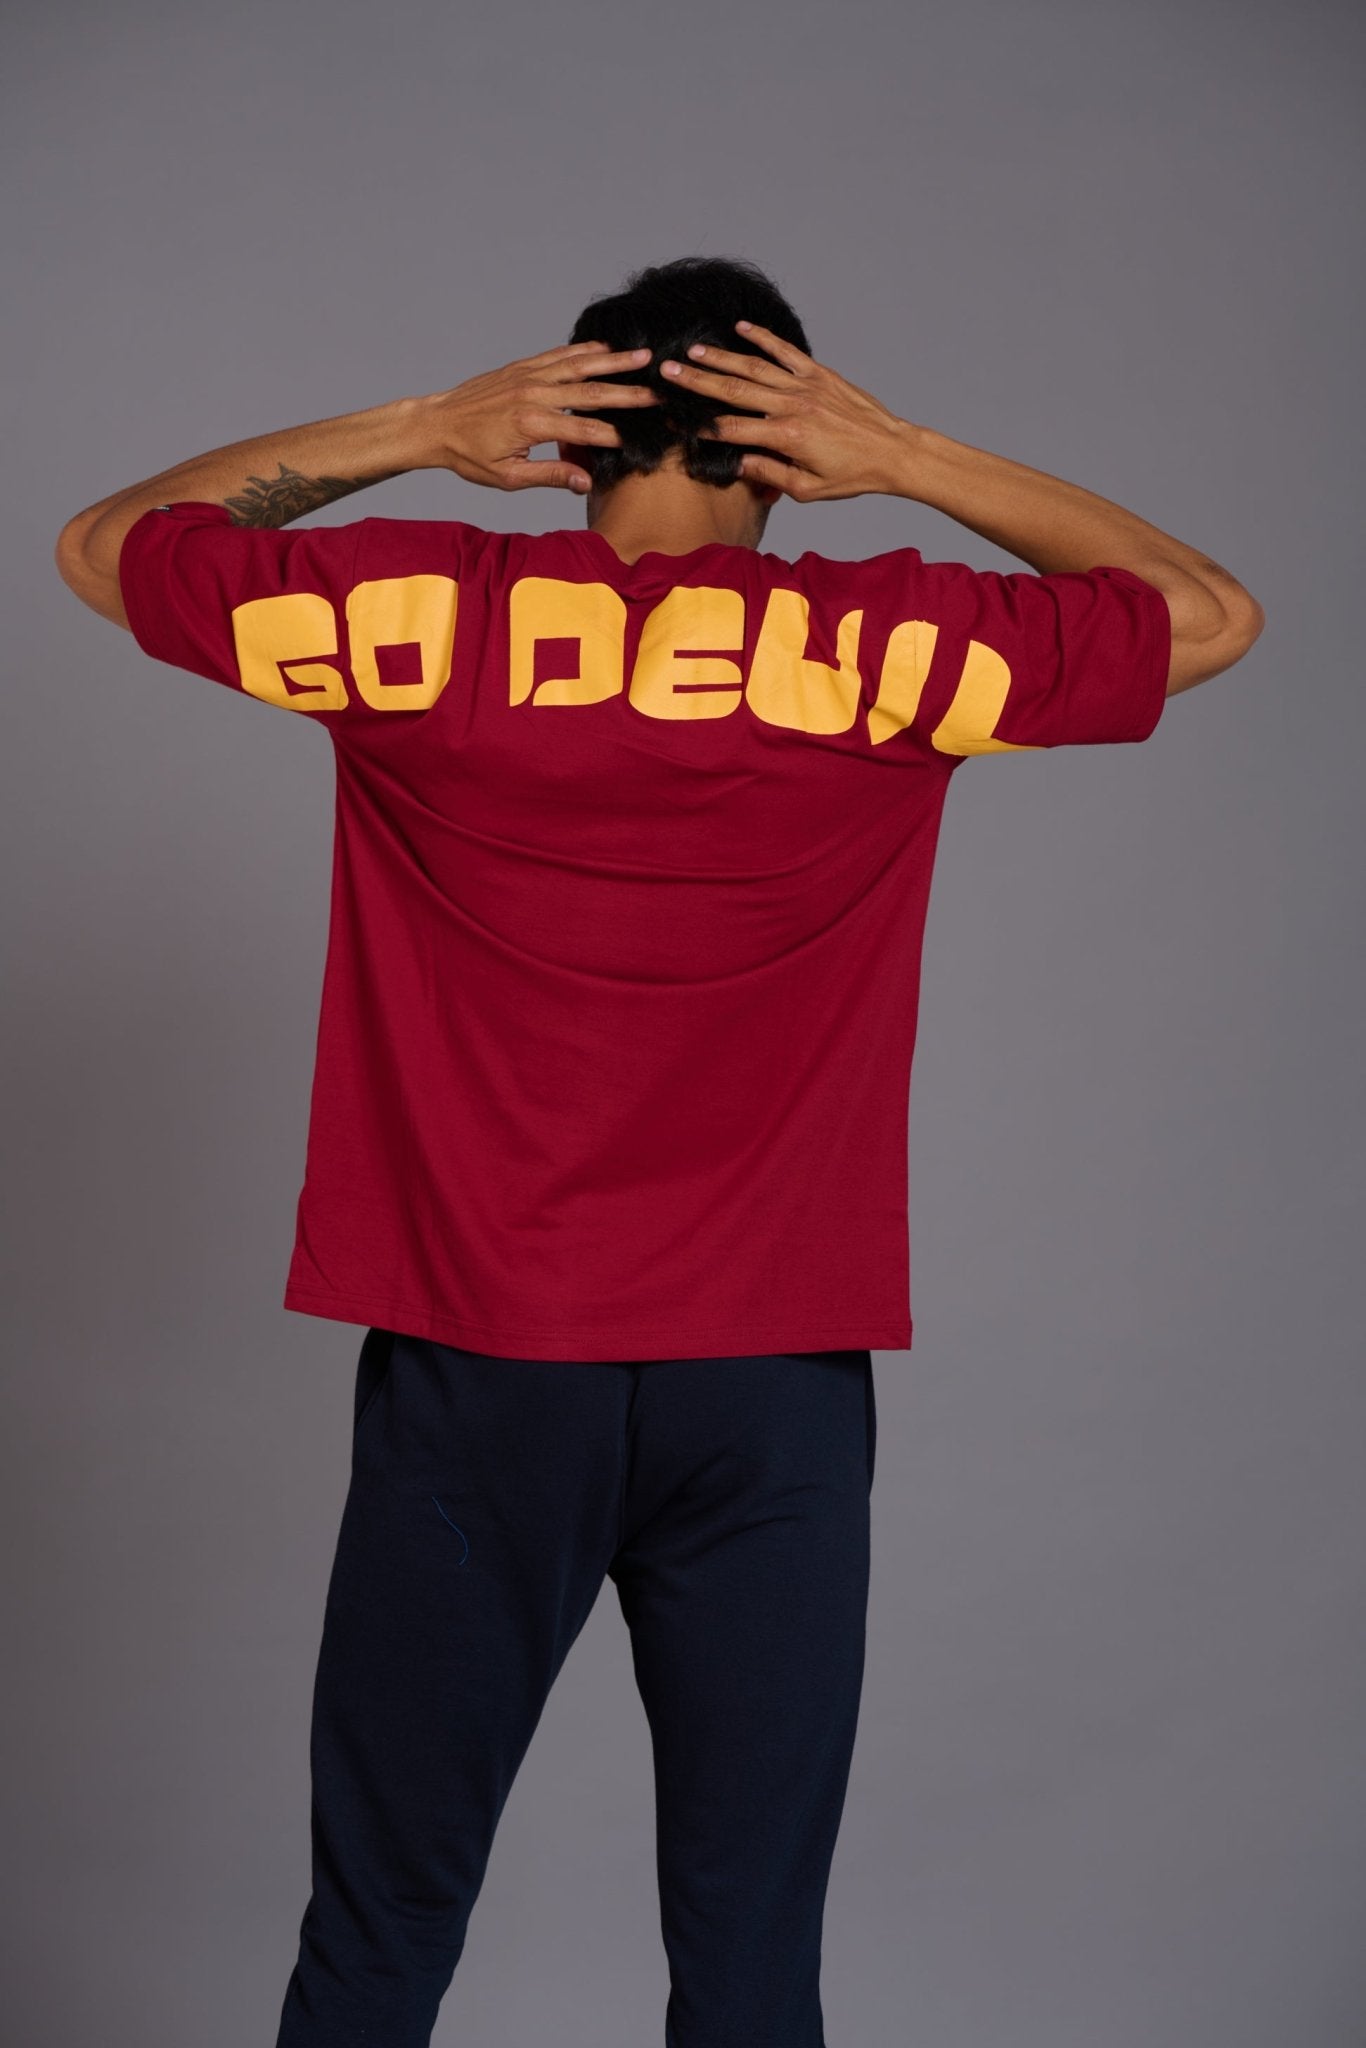 Go Devil Printed Burgundy Color Oversized T-Shirt for Men - Go Devil